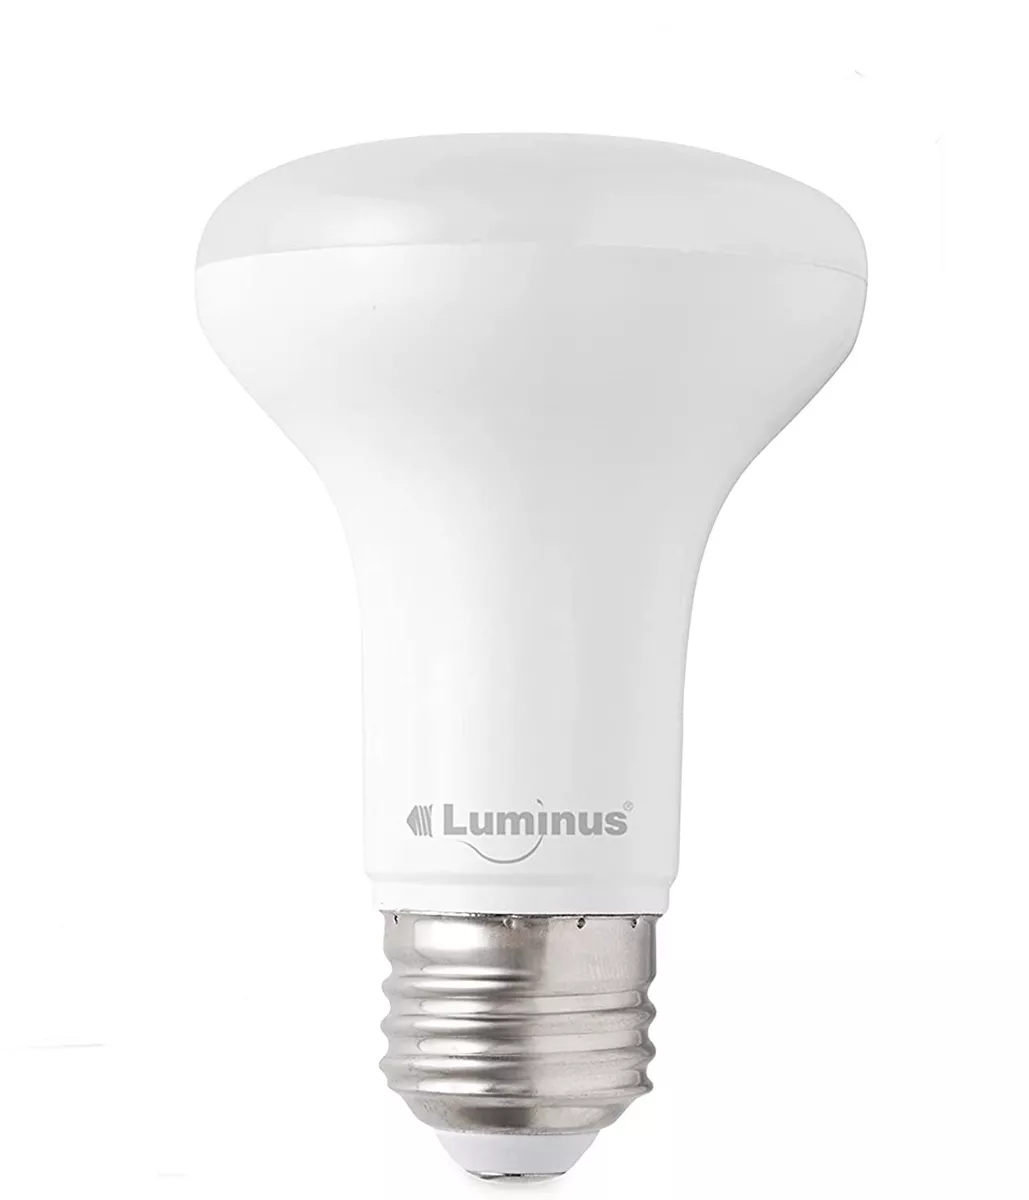 luminus light bulbs